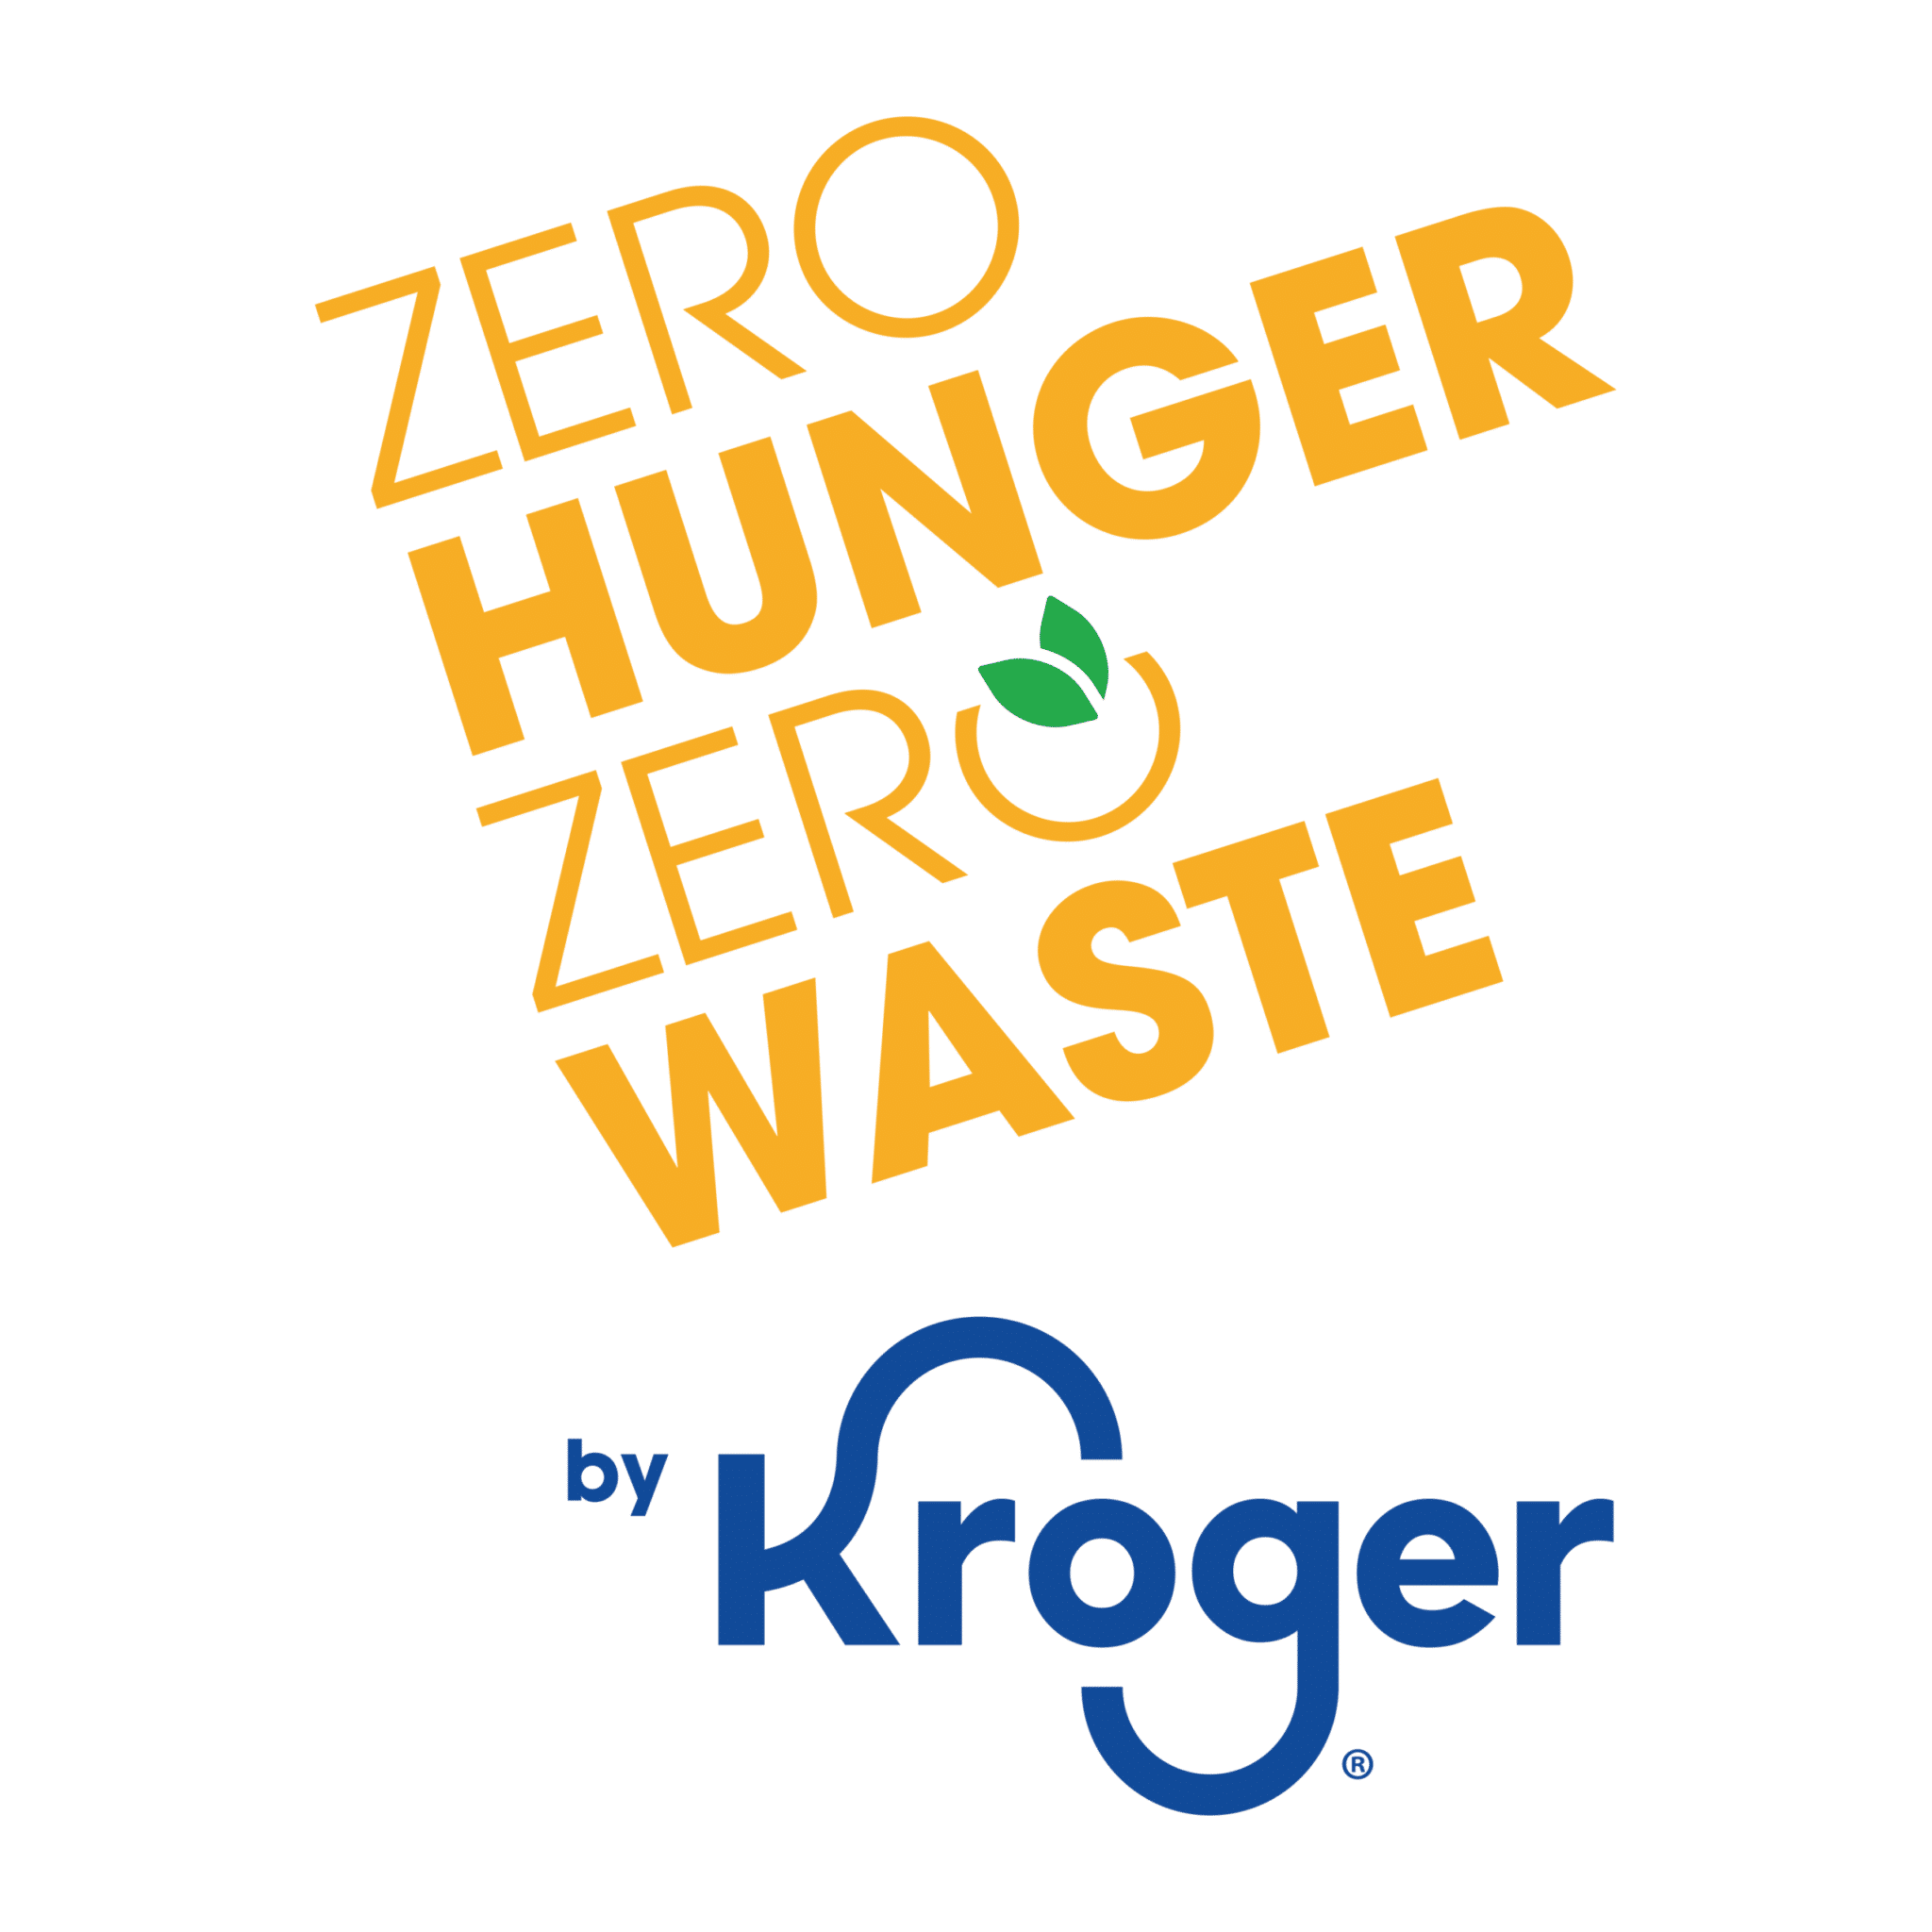 Kroger-Zero-Hunger-Zero-Waste-Logo-scaled.png